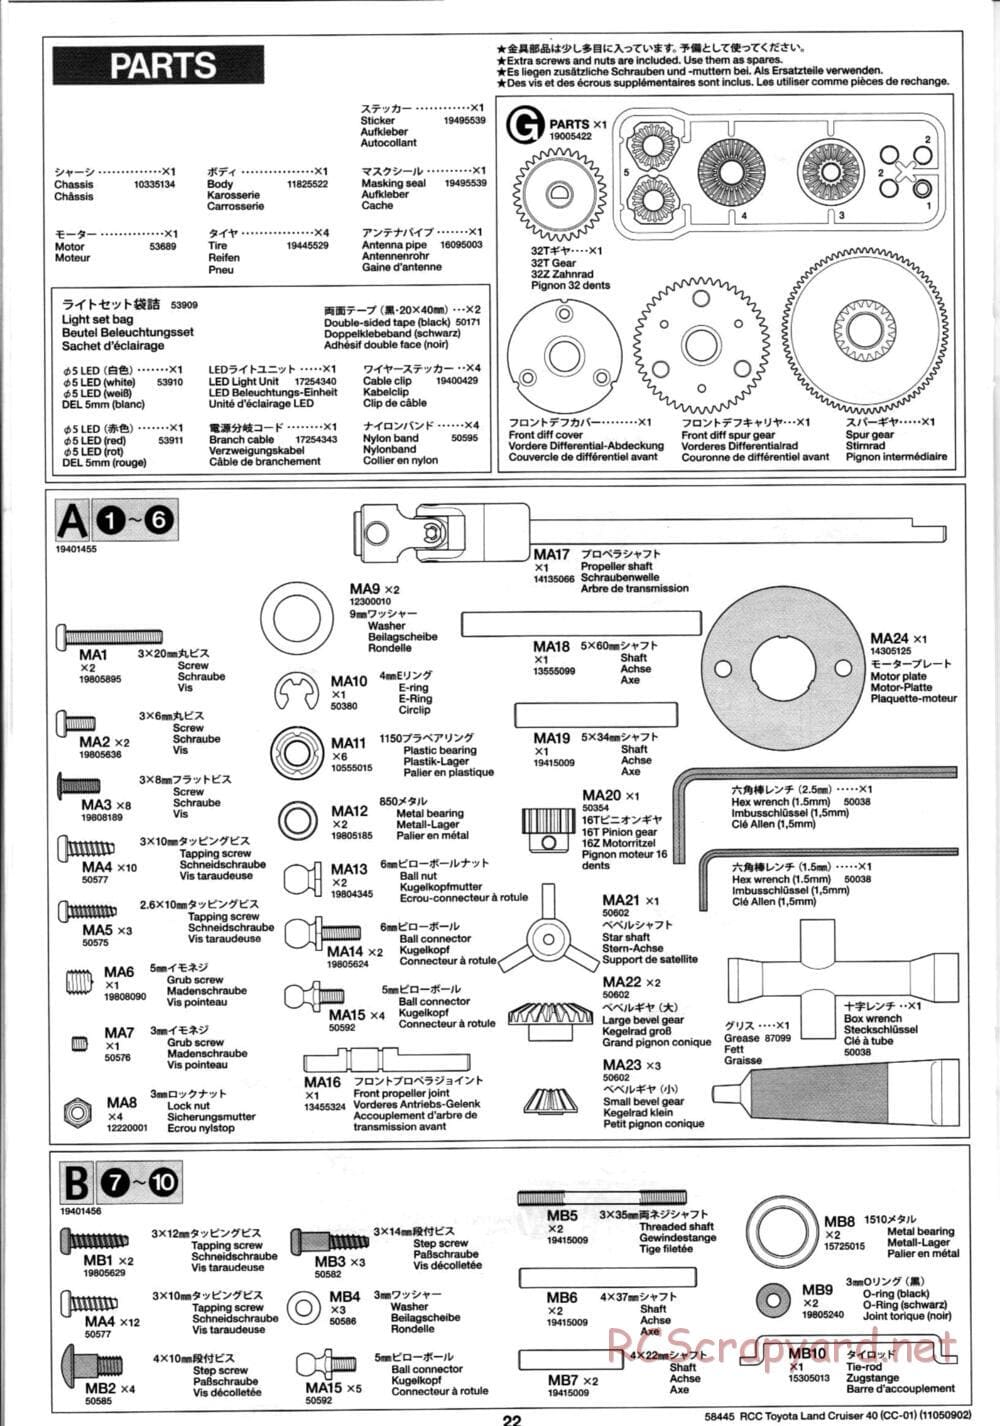 Tamiya - Toyota Land Cruiser 40 - CC-01 Chassis - Manual - Page 22